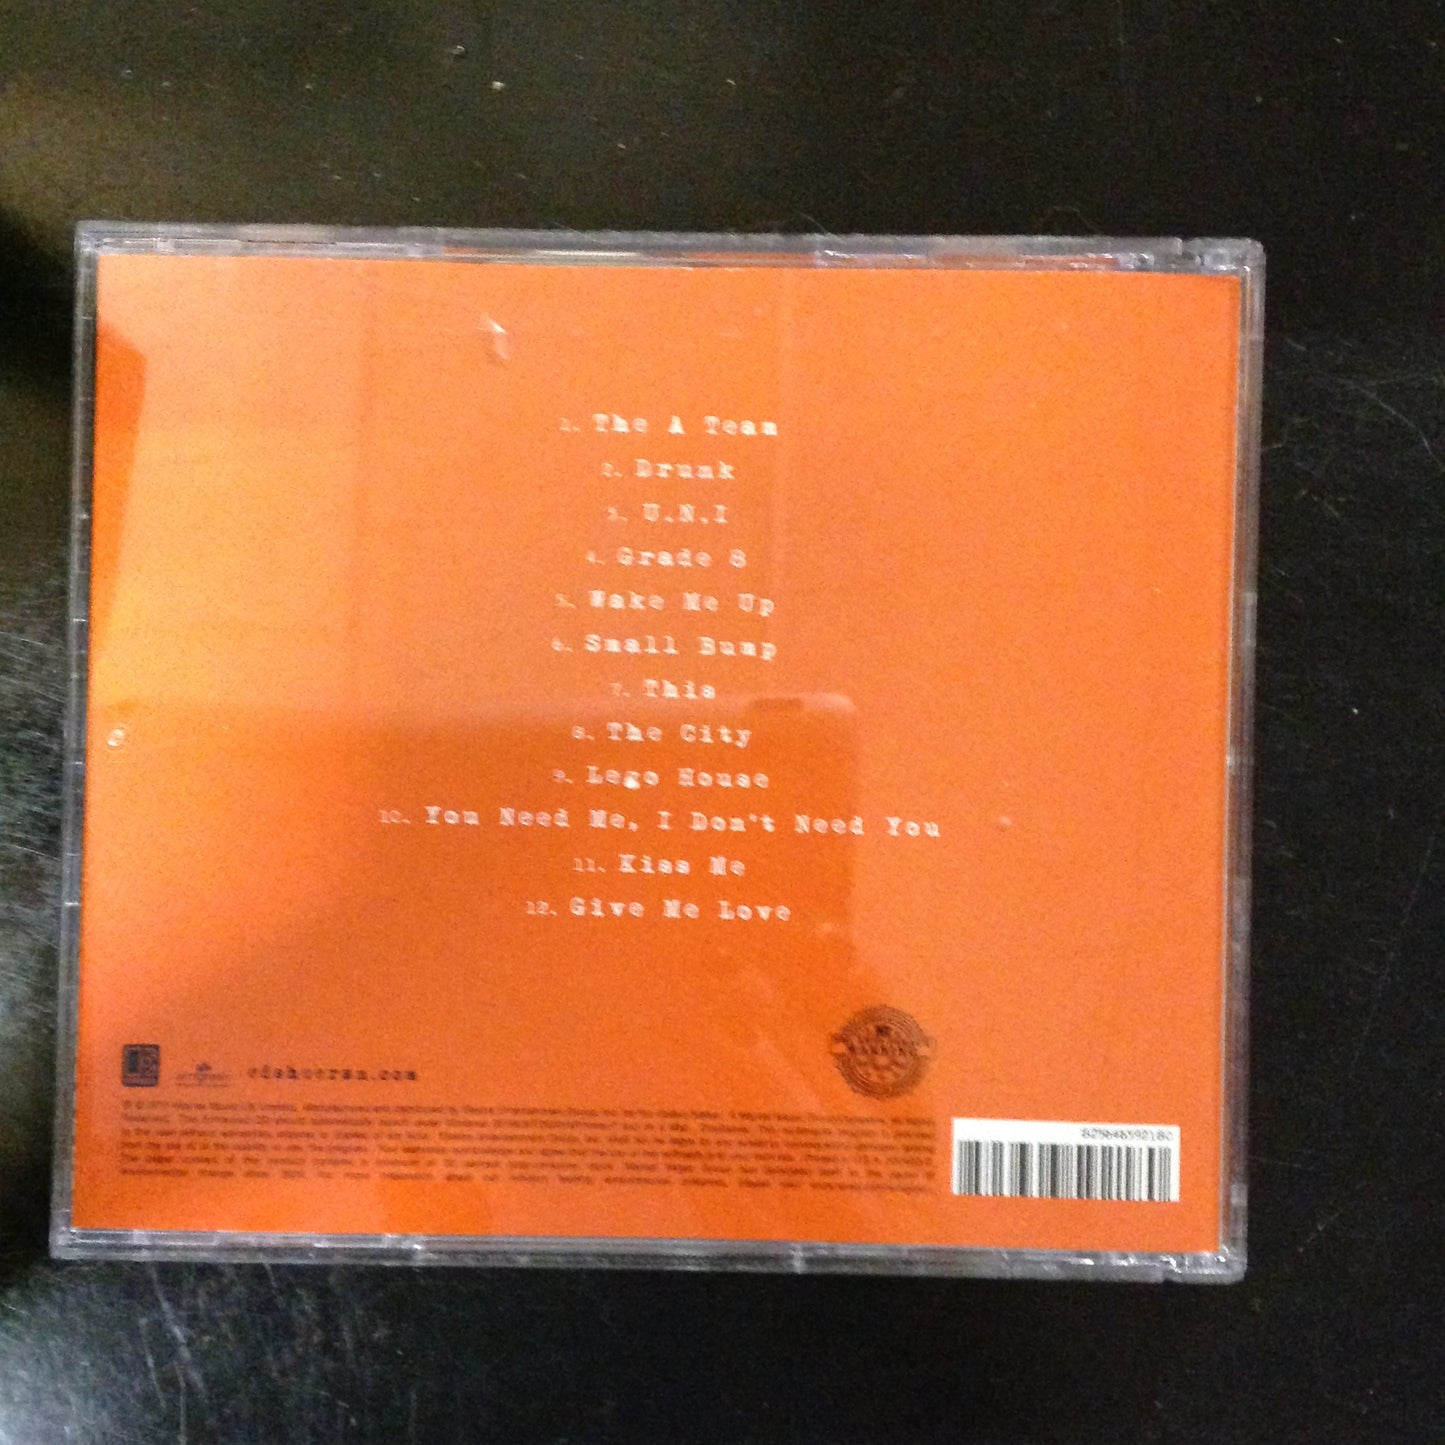 CD Ed Sheeran Plus + 530433-2 Rock Pop Hip Hop 2012 Vocal Acoustic